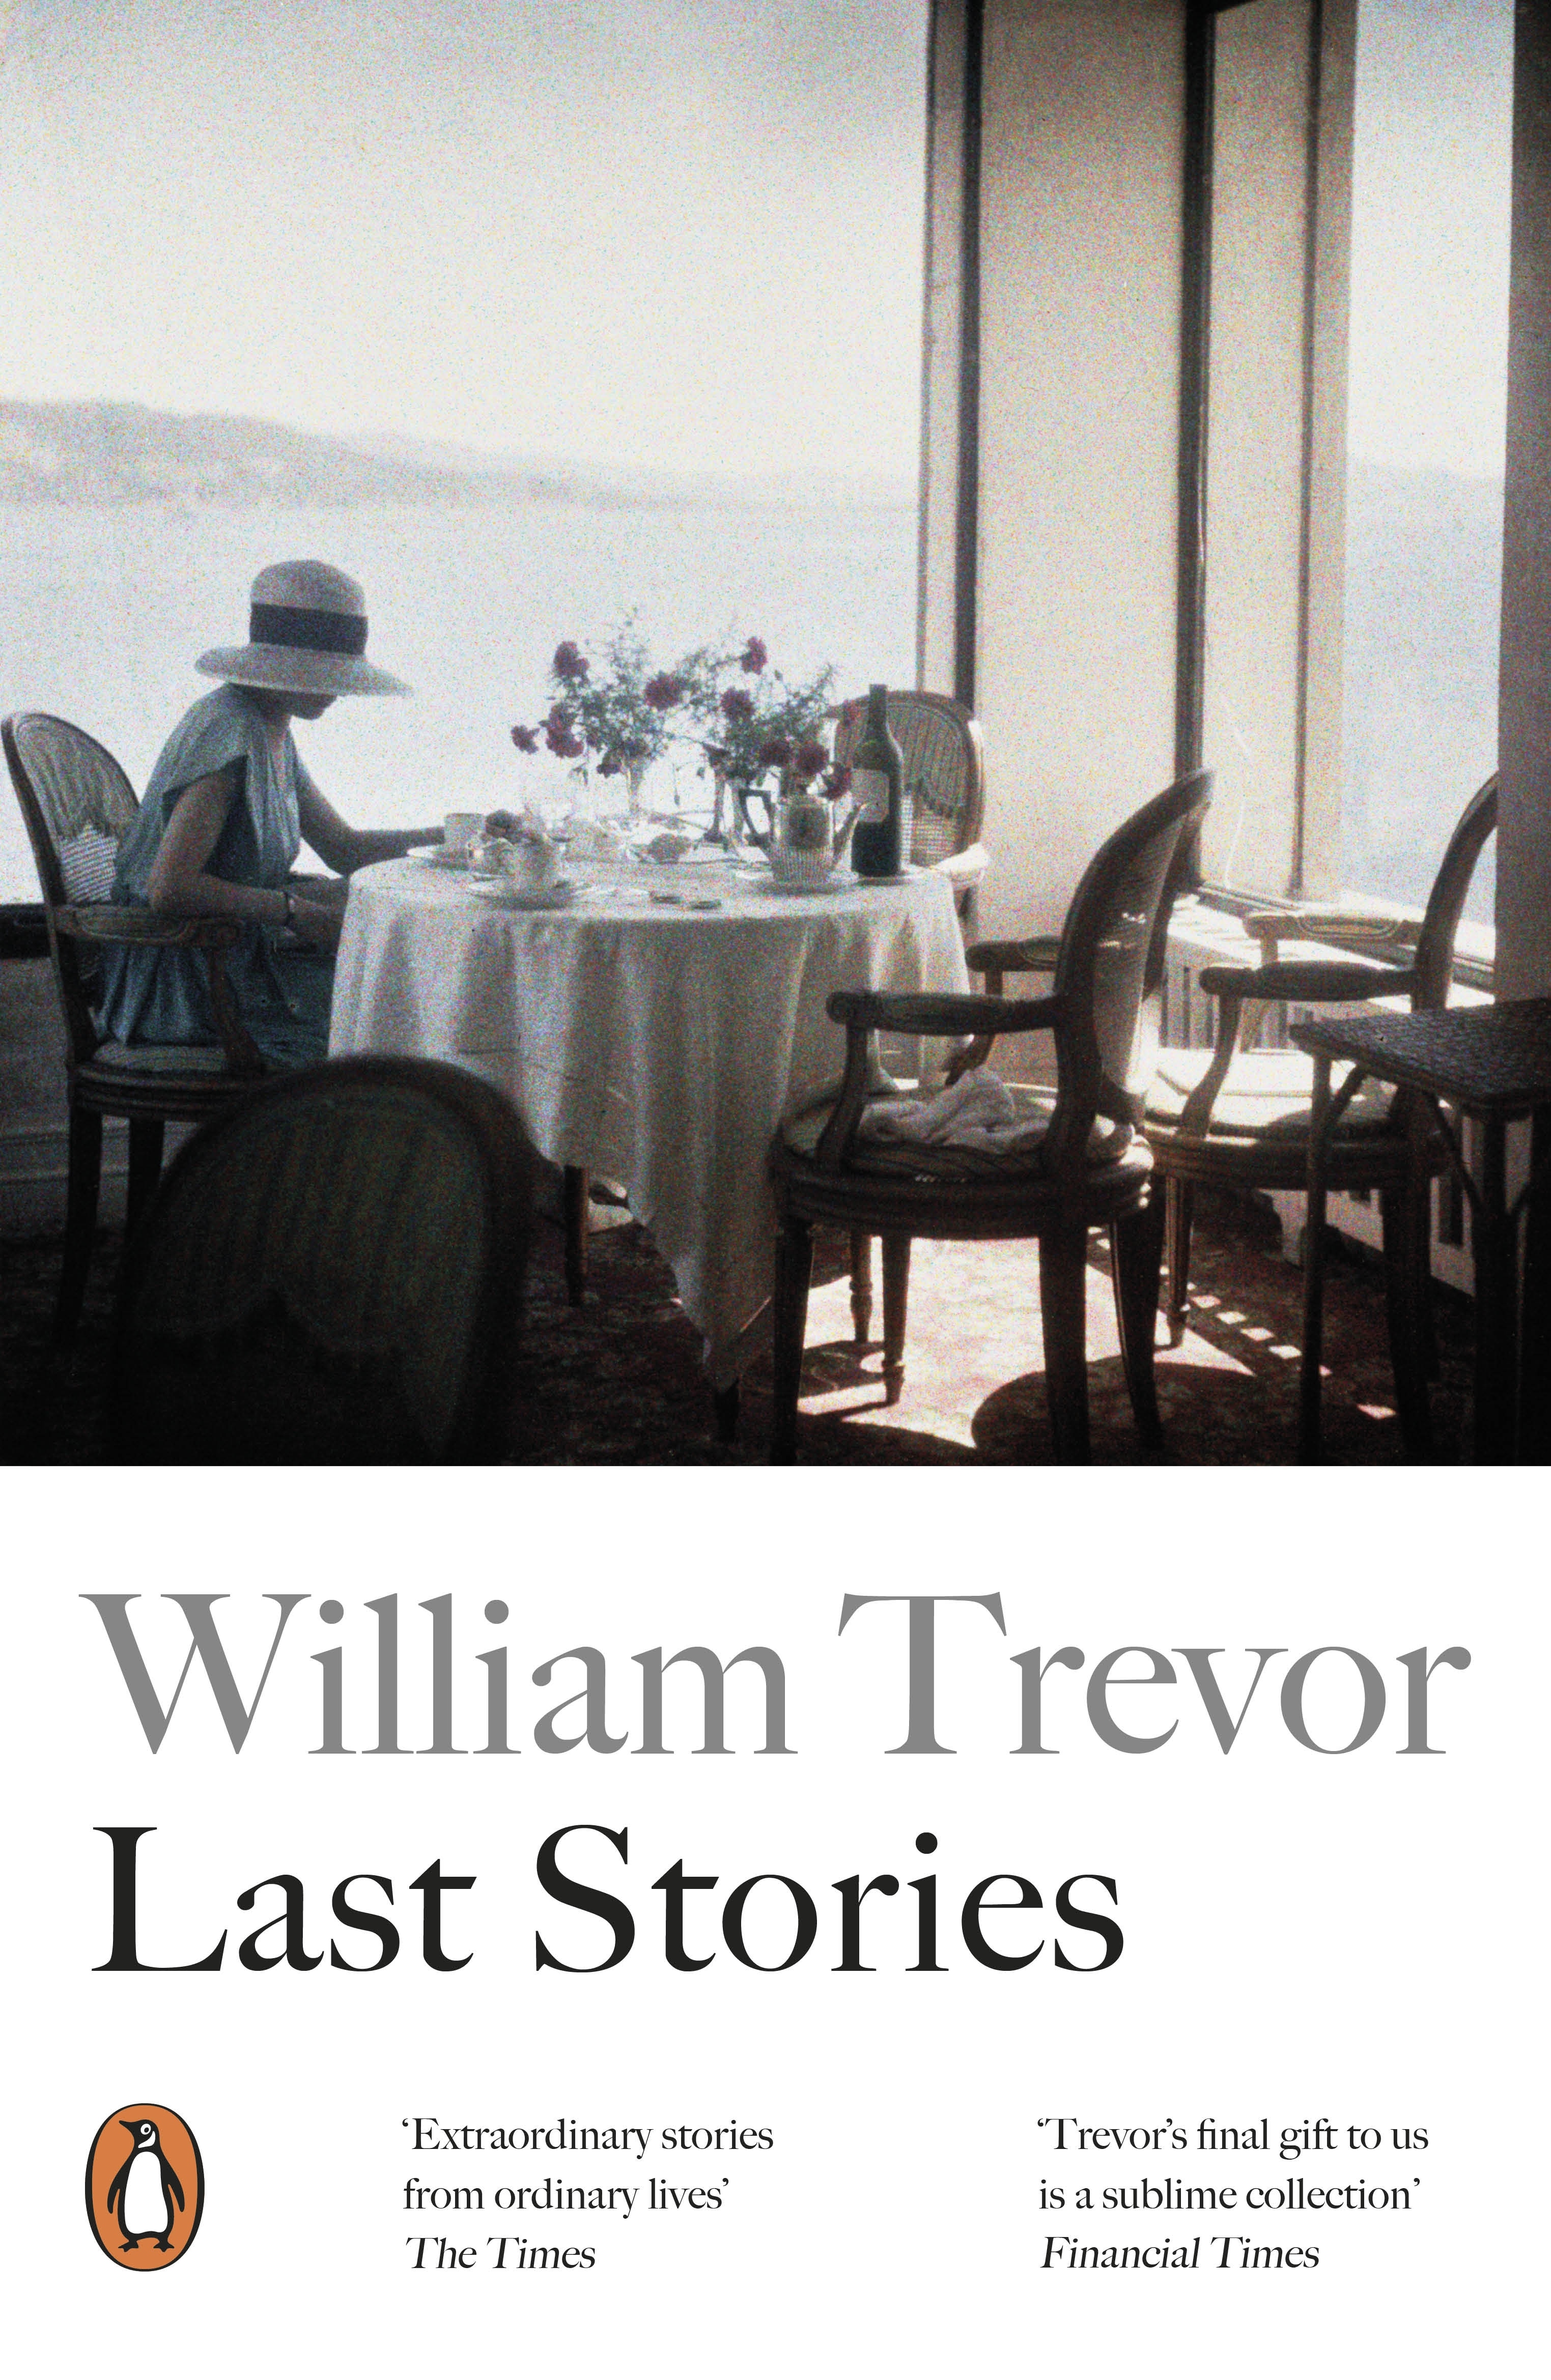 Book “Last Stories” by William Trevor — June 6, 2019